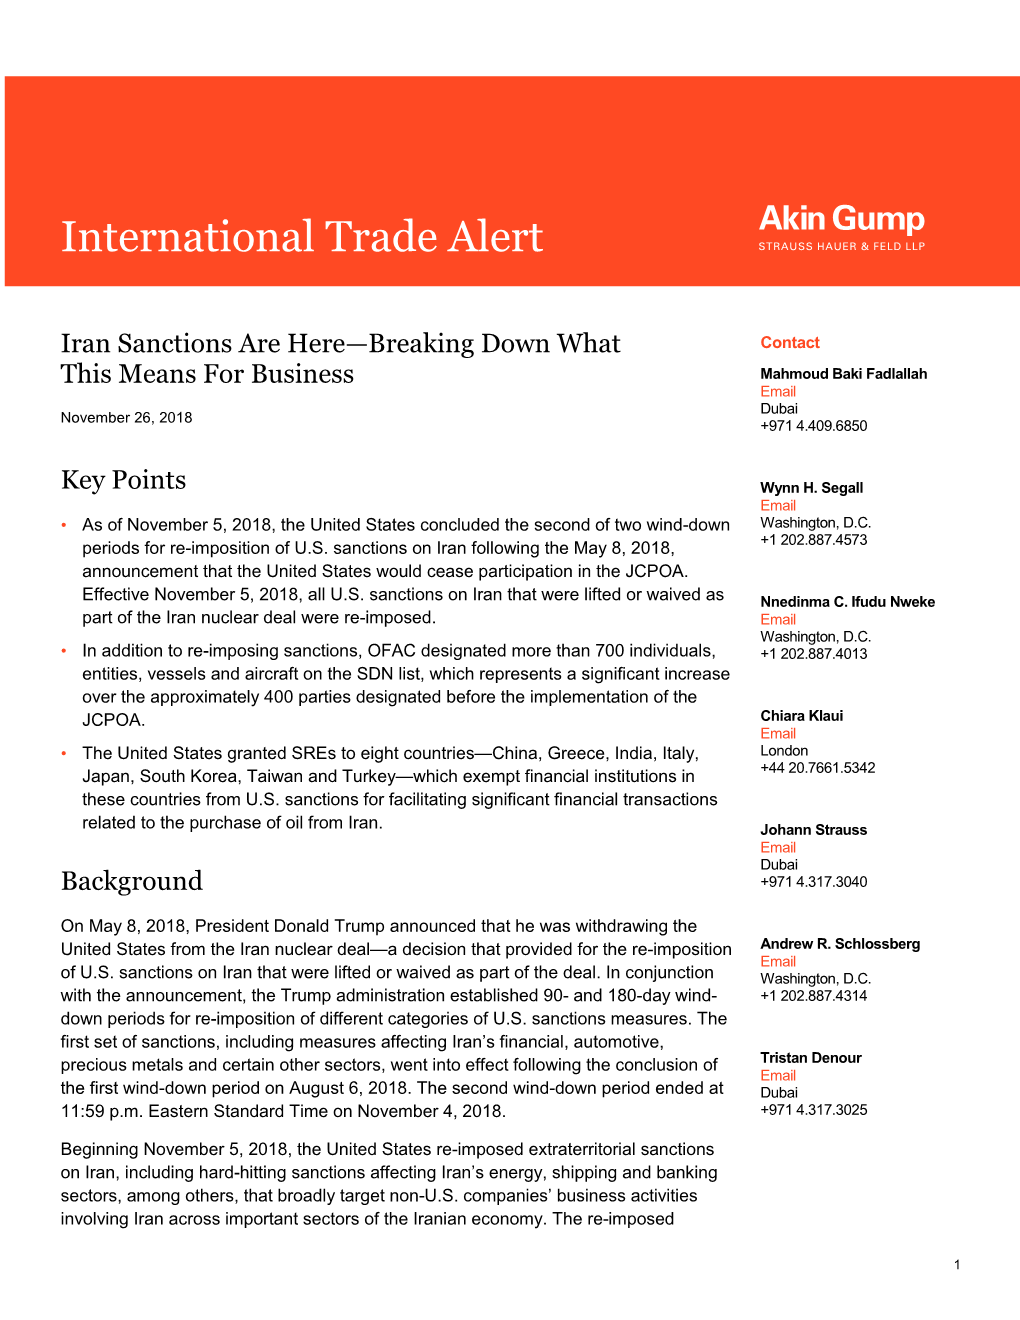 Iran Sanctions International Trade Alert